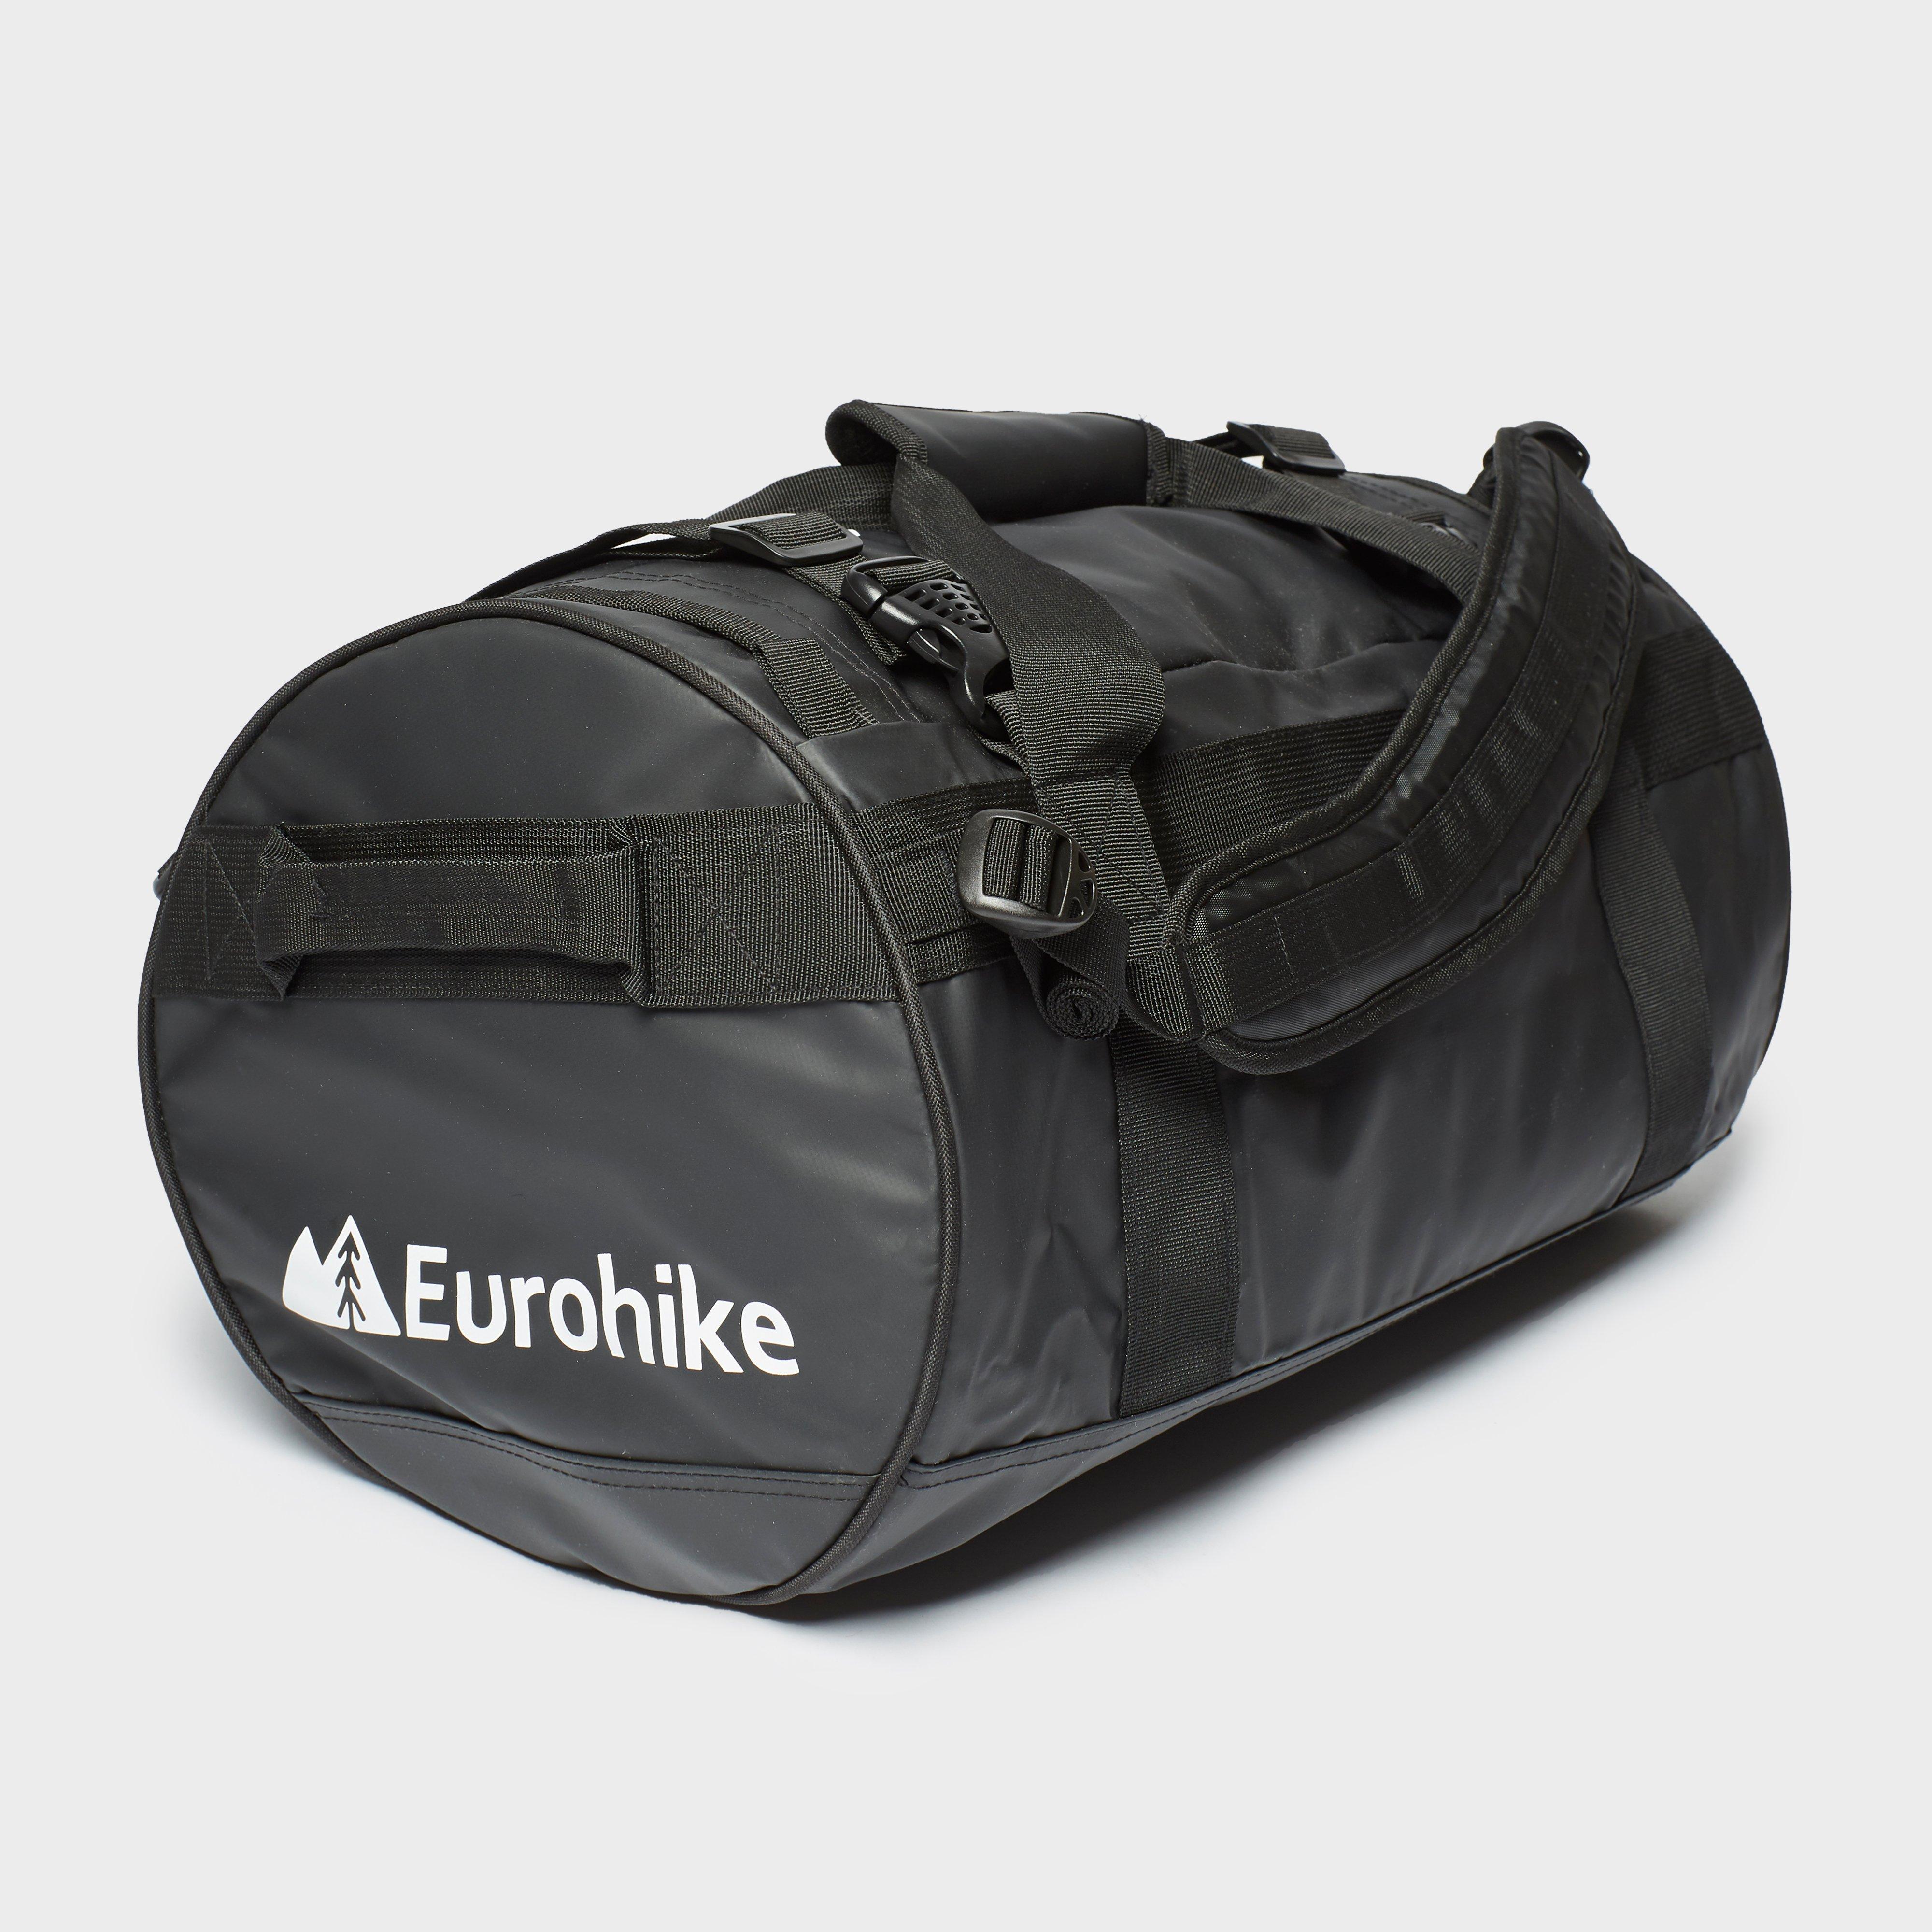 Eurohike Eurohike Transit 40 Hybrid Duffel Bag - Black, Black